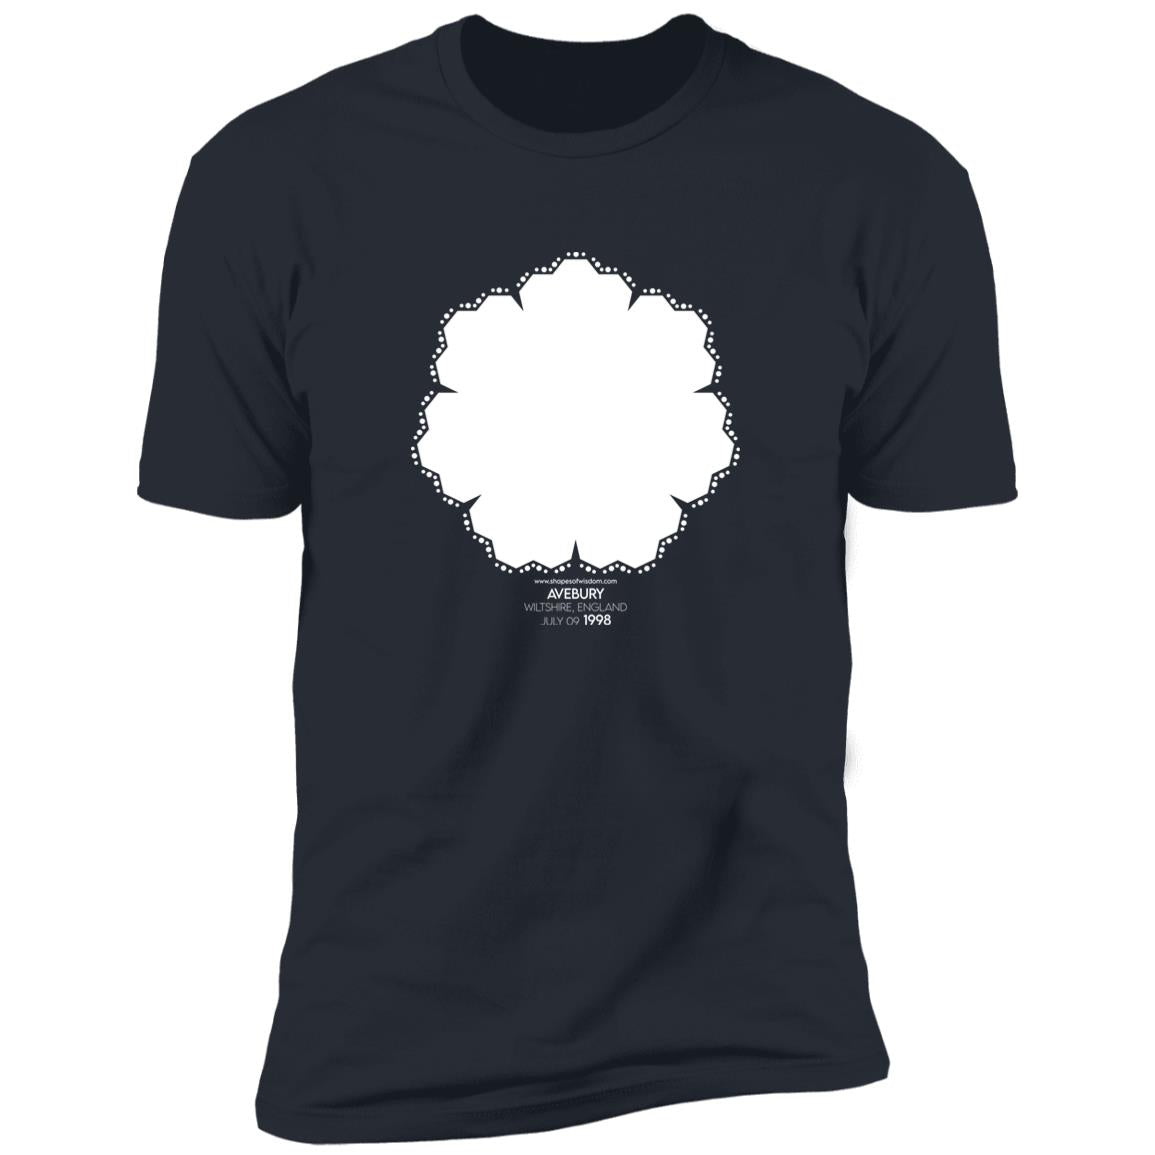 Crop Circle Premium T-Shirt - Avebury 4